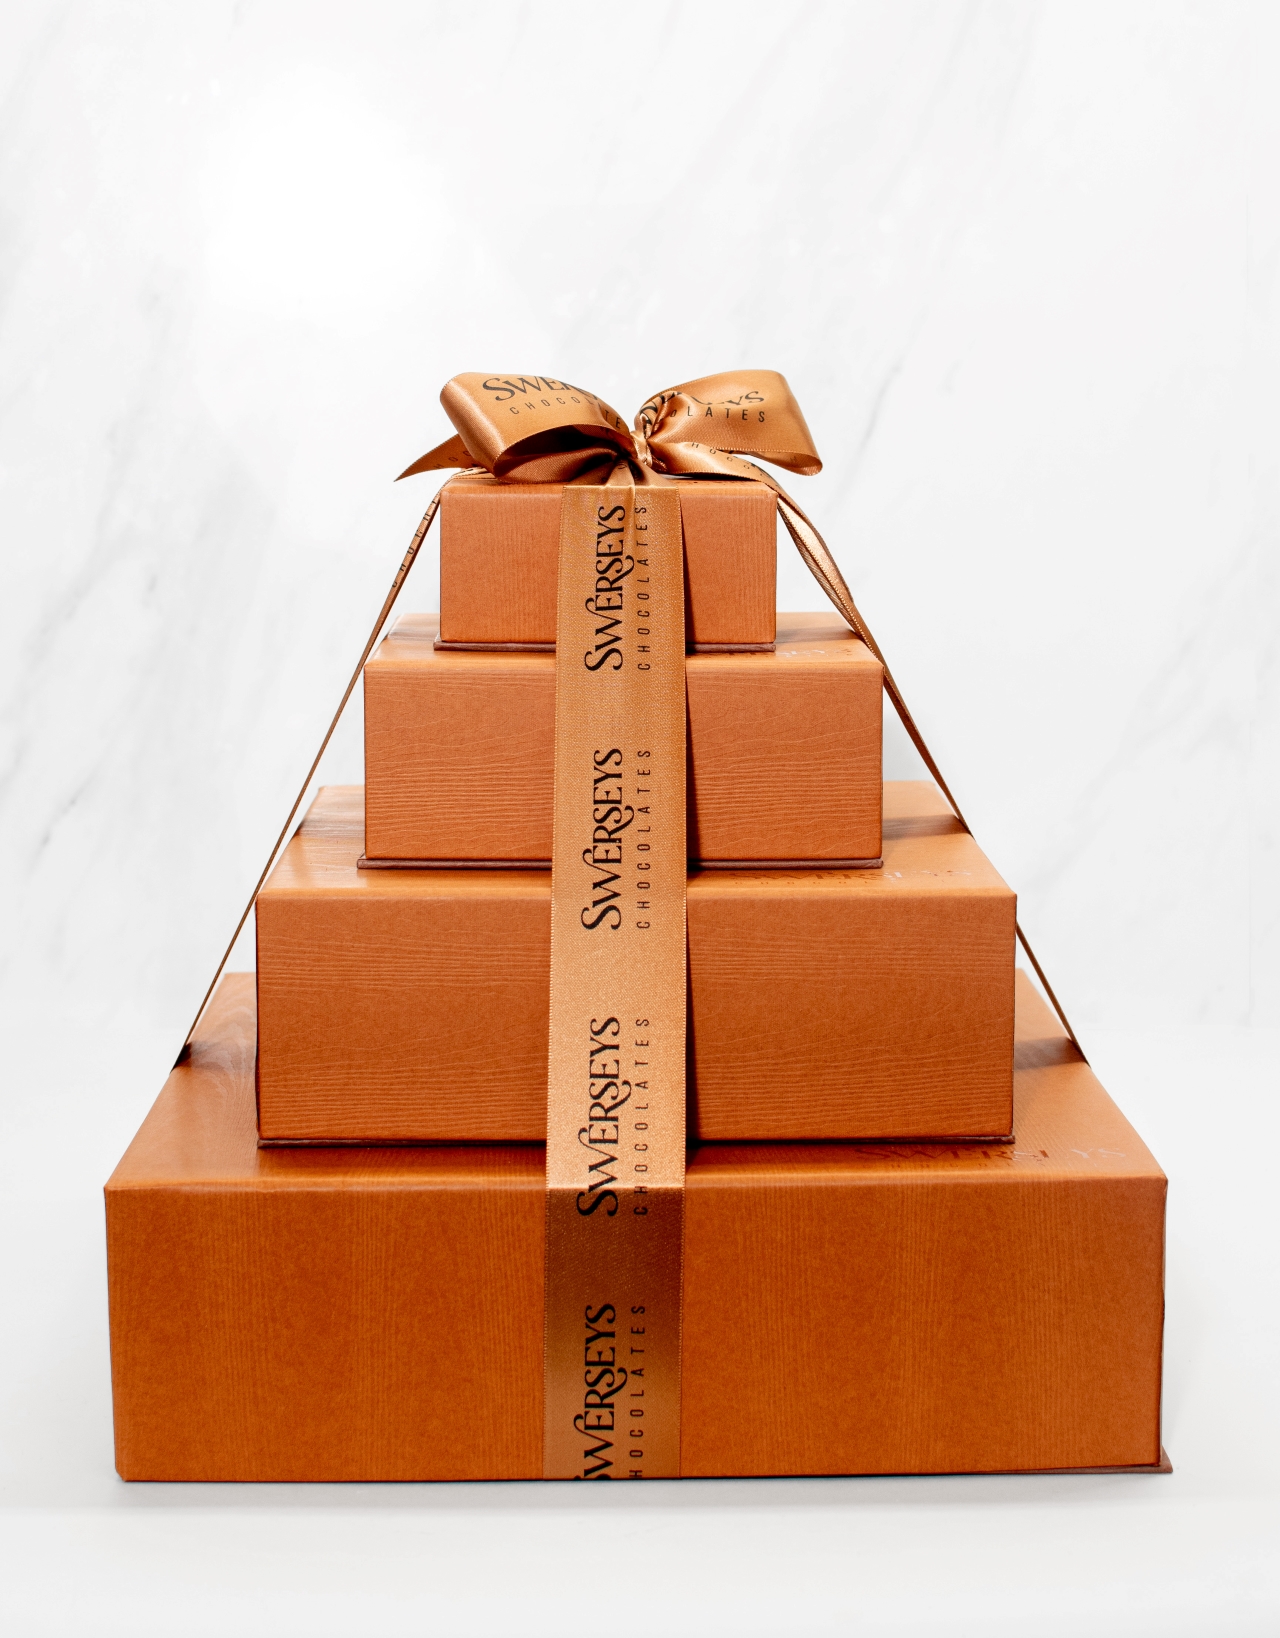 Swerseys Deluxe 5-Tier Brown Chocolate Gift Tower